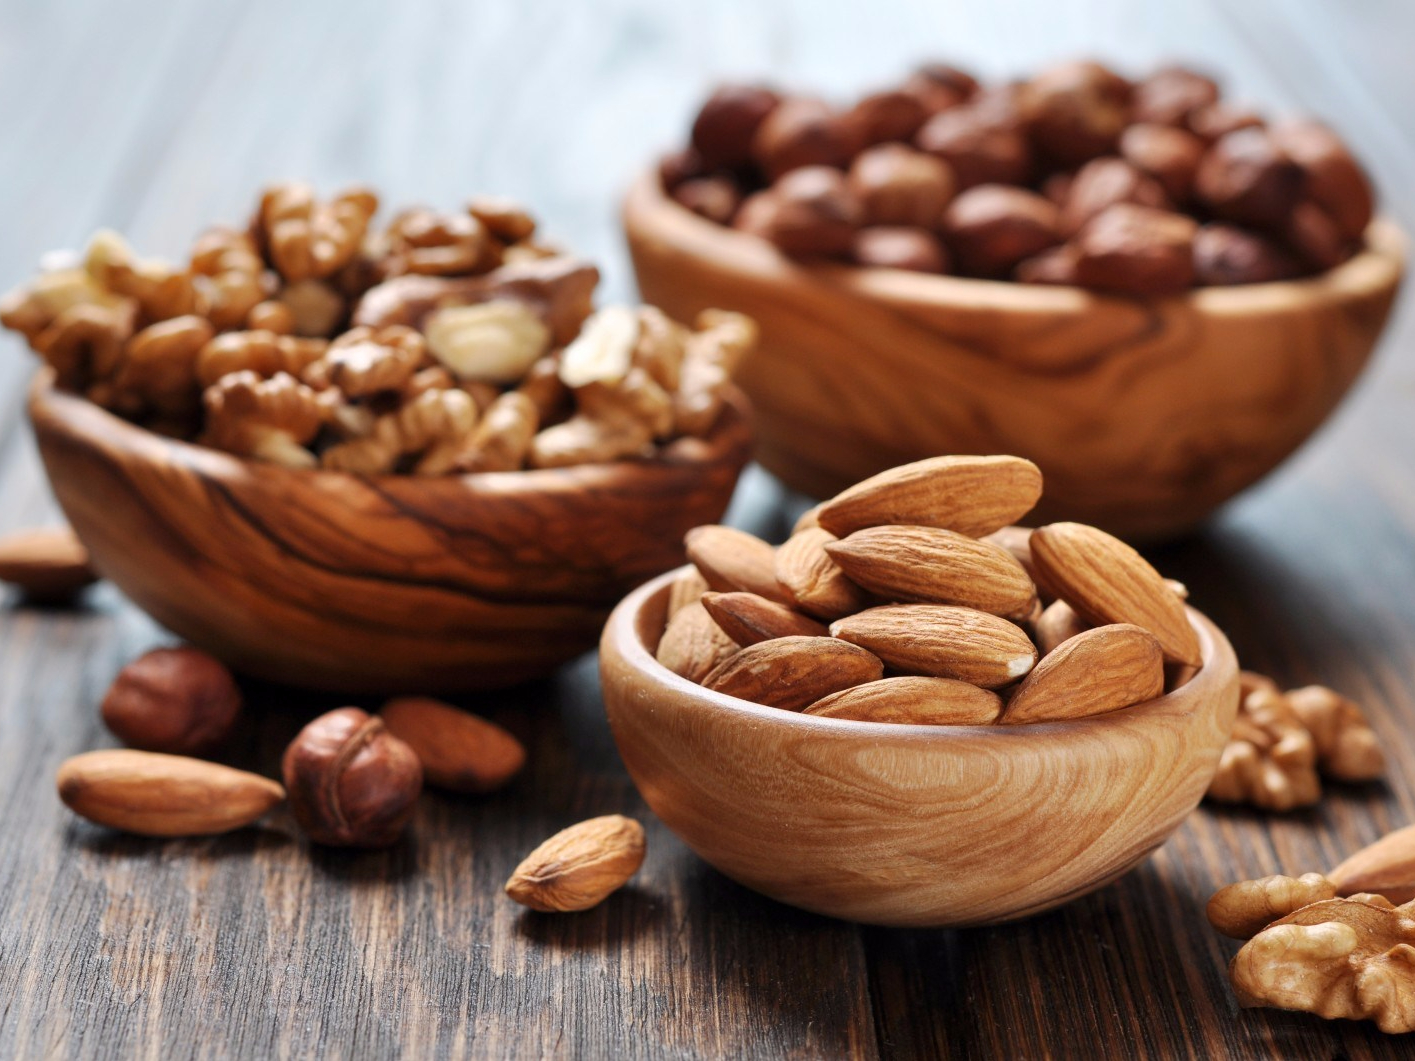 almonds-walnuts-and-hazelnuts.jpg